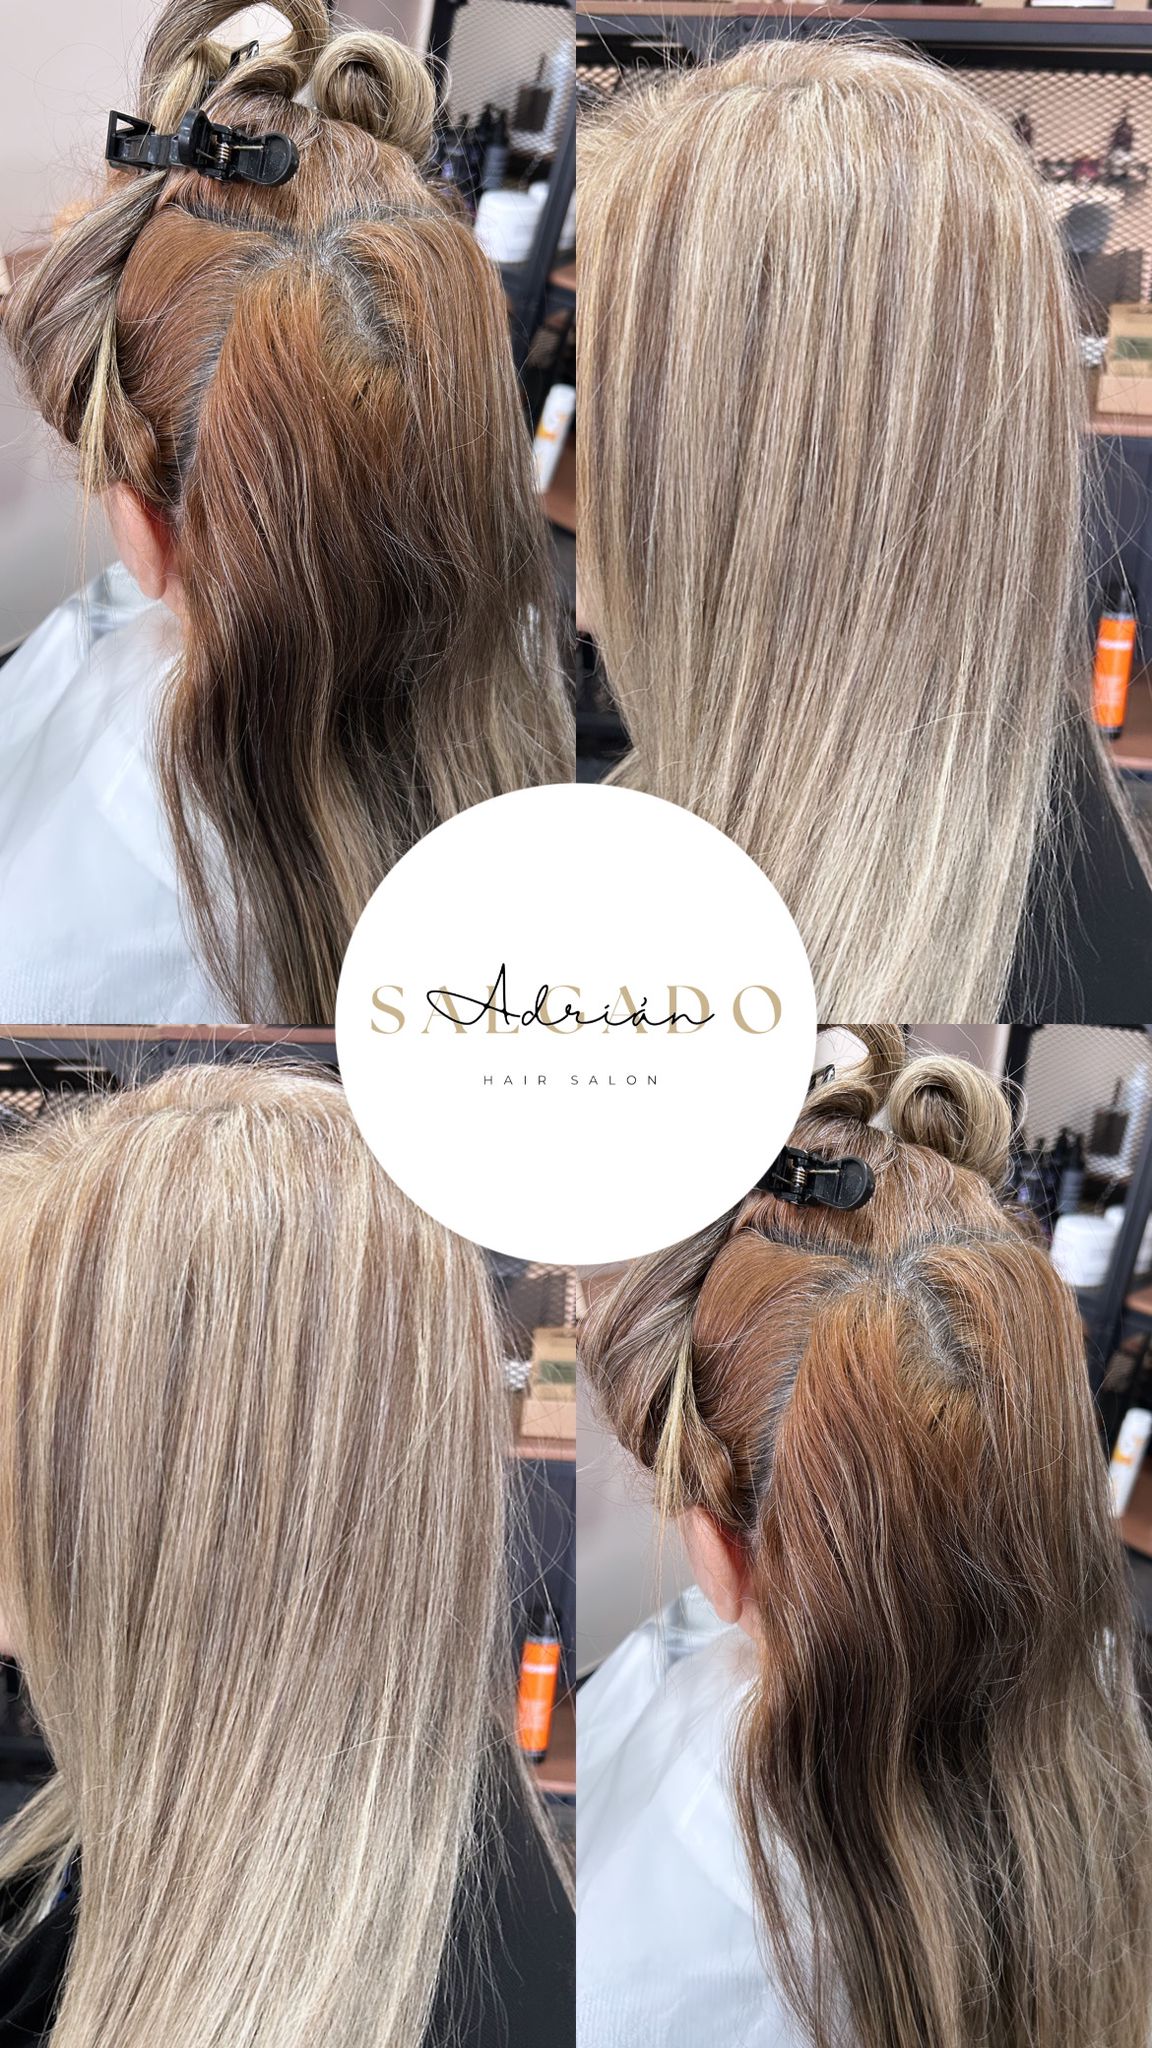 Images Adrian Salgado Hair Salon